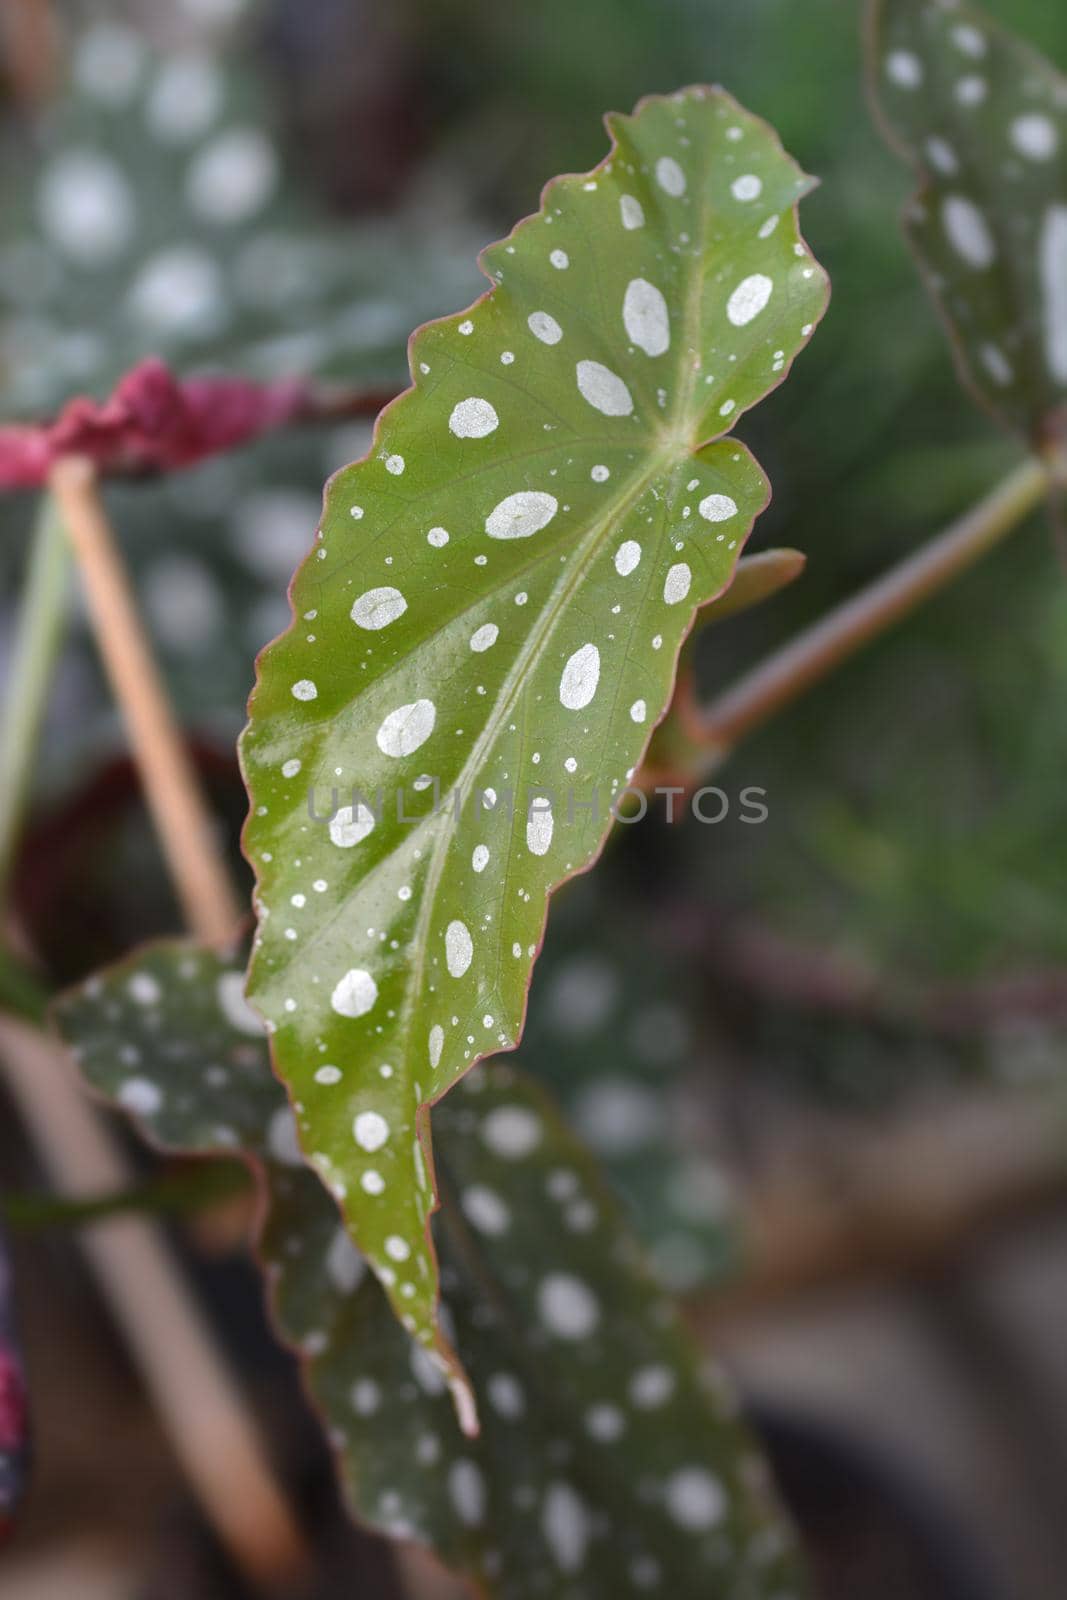 Polka dot begonia leaves - Latin name - Begonia maculata